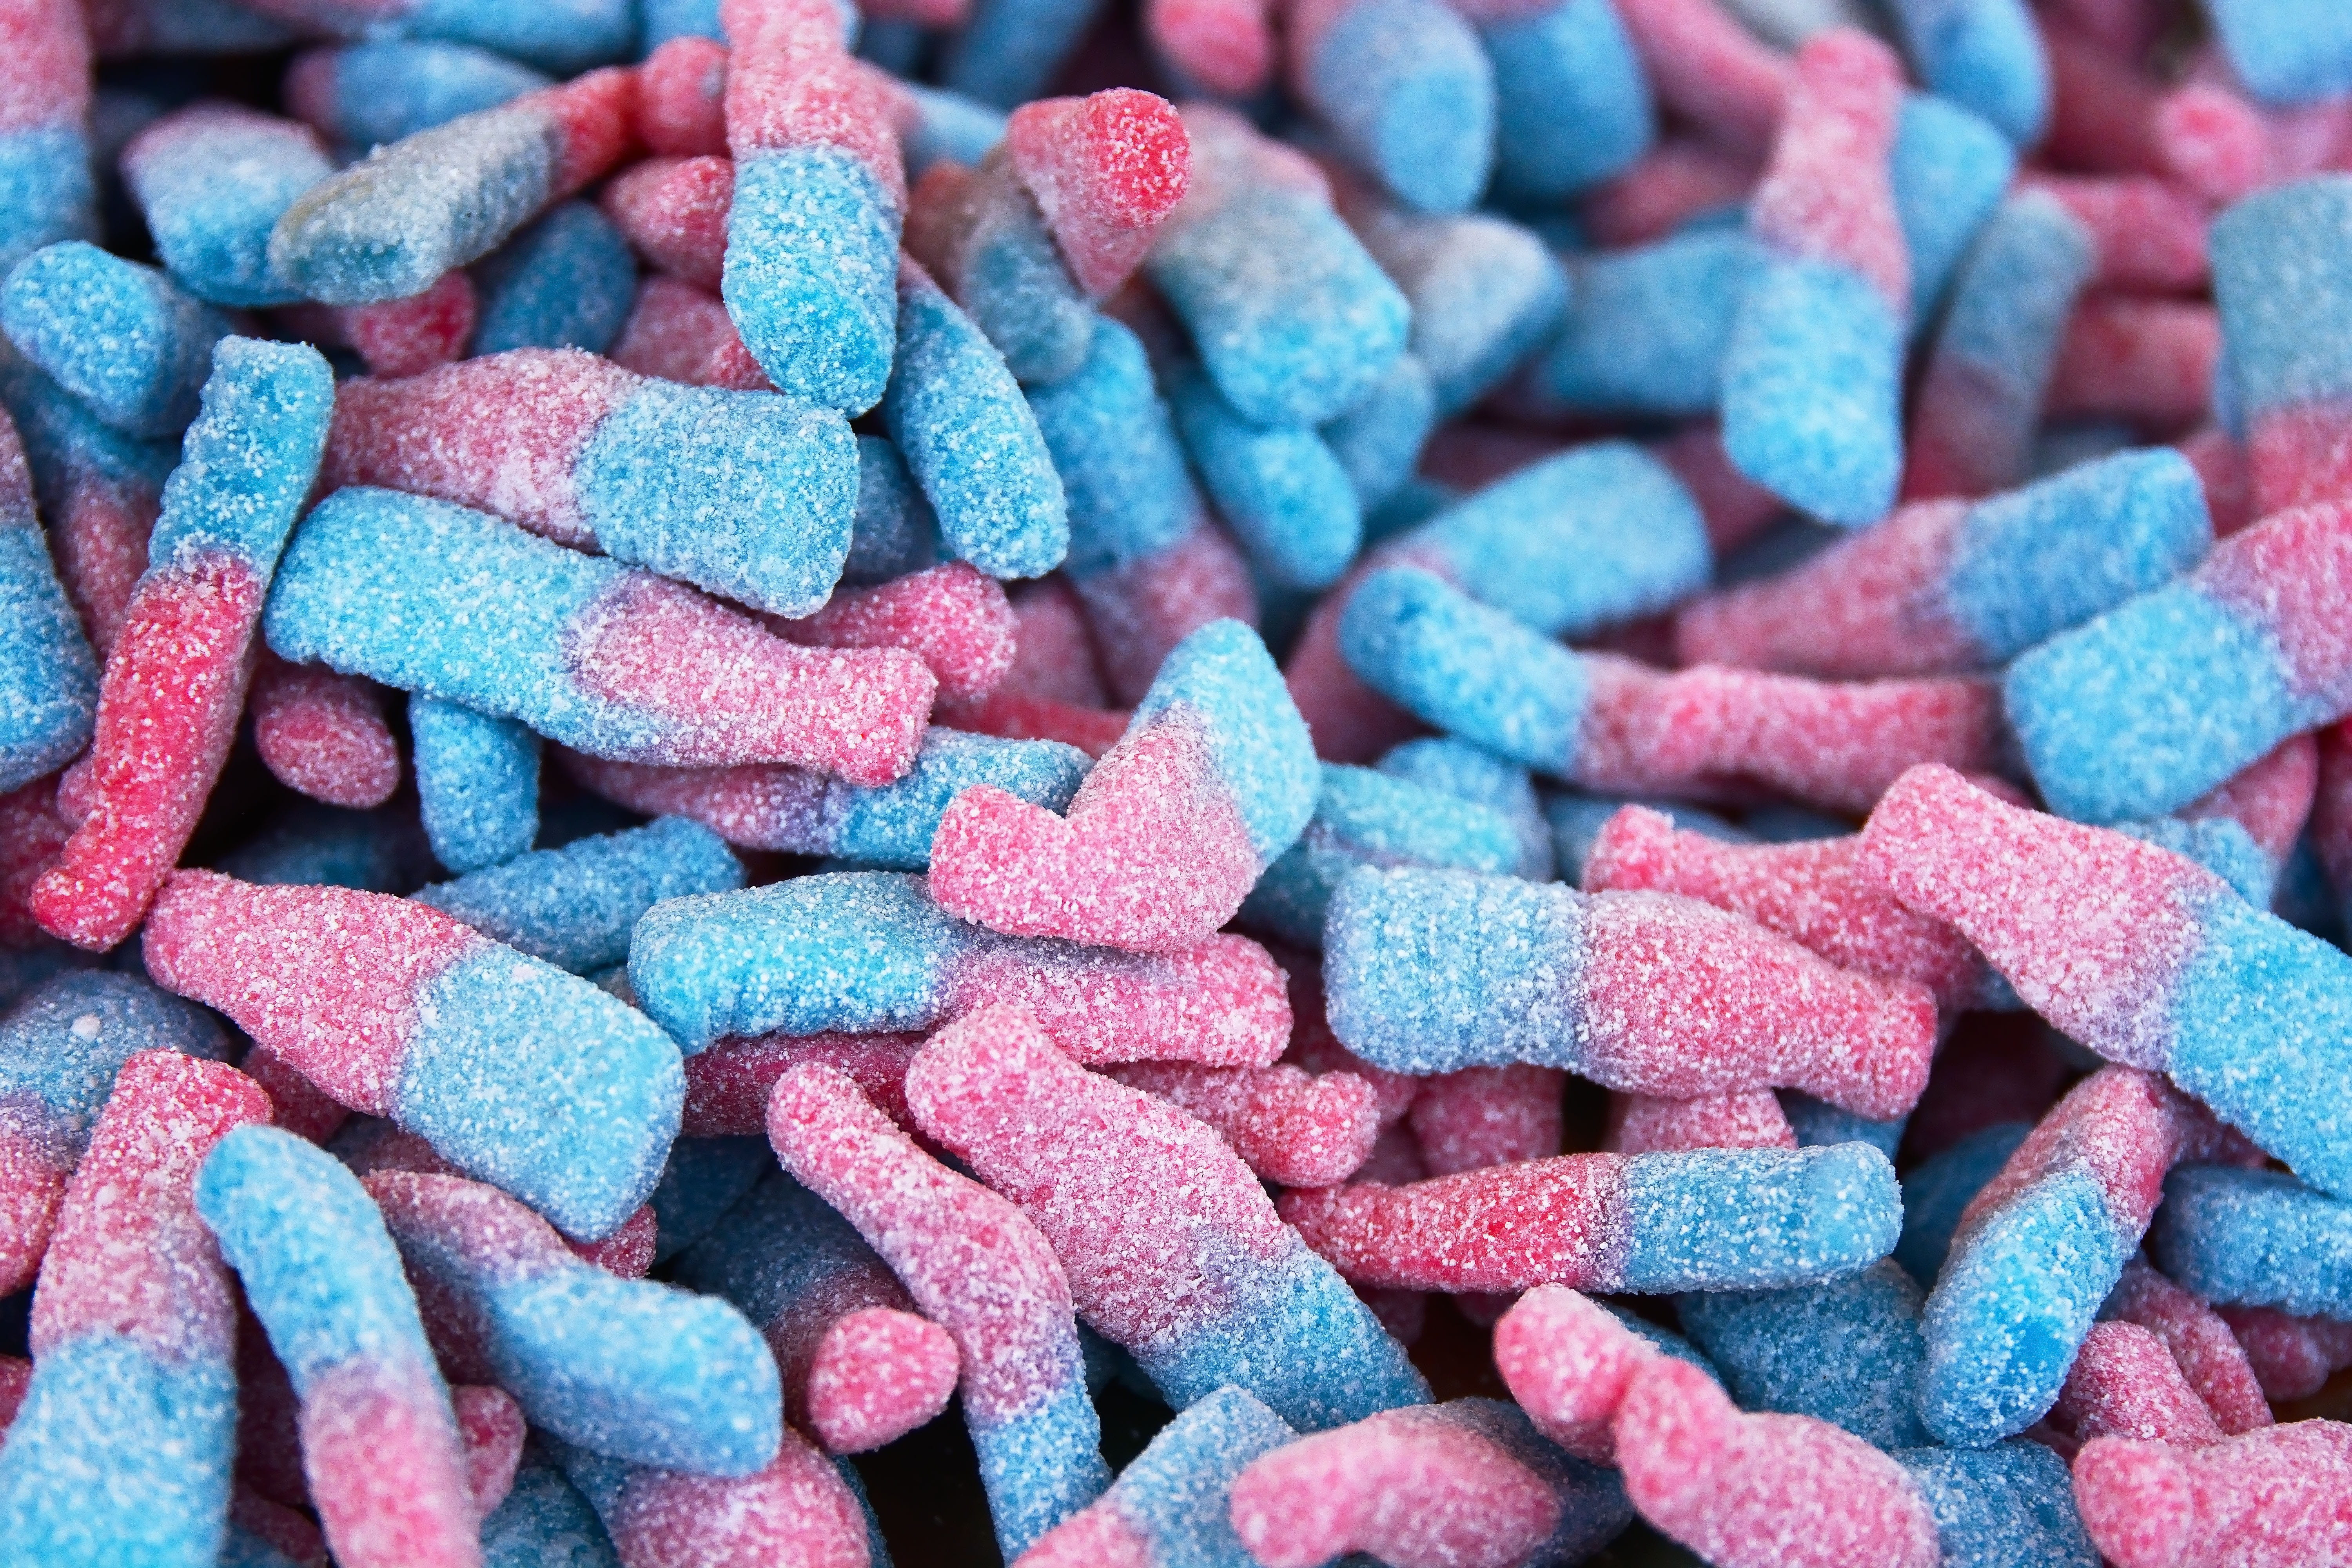 acid, sweet, nutrition, sour, food, nibble, pink-blue, sugar